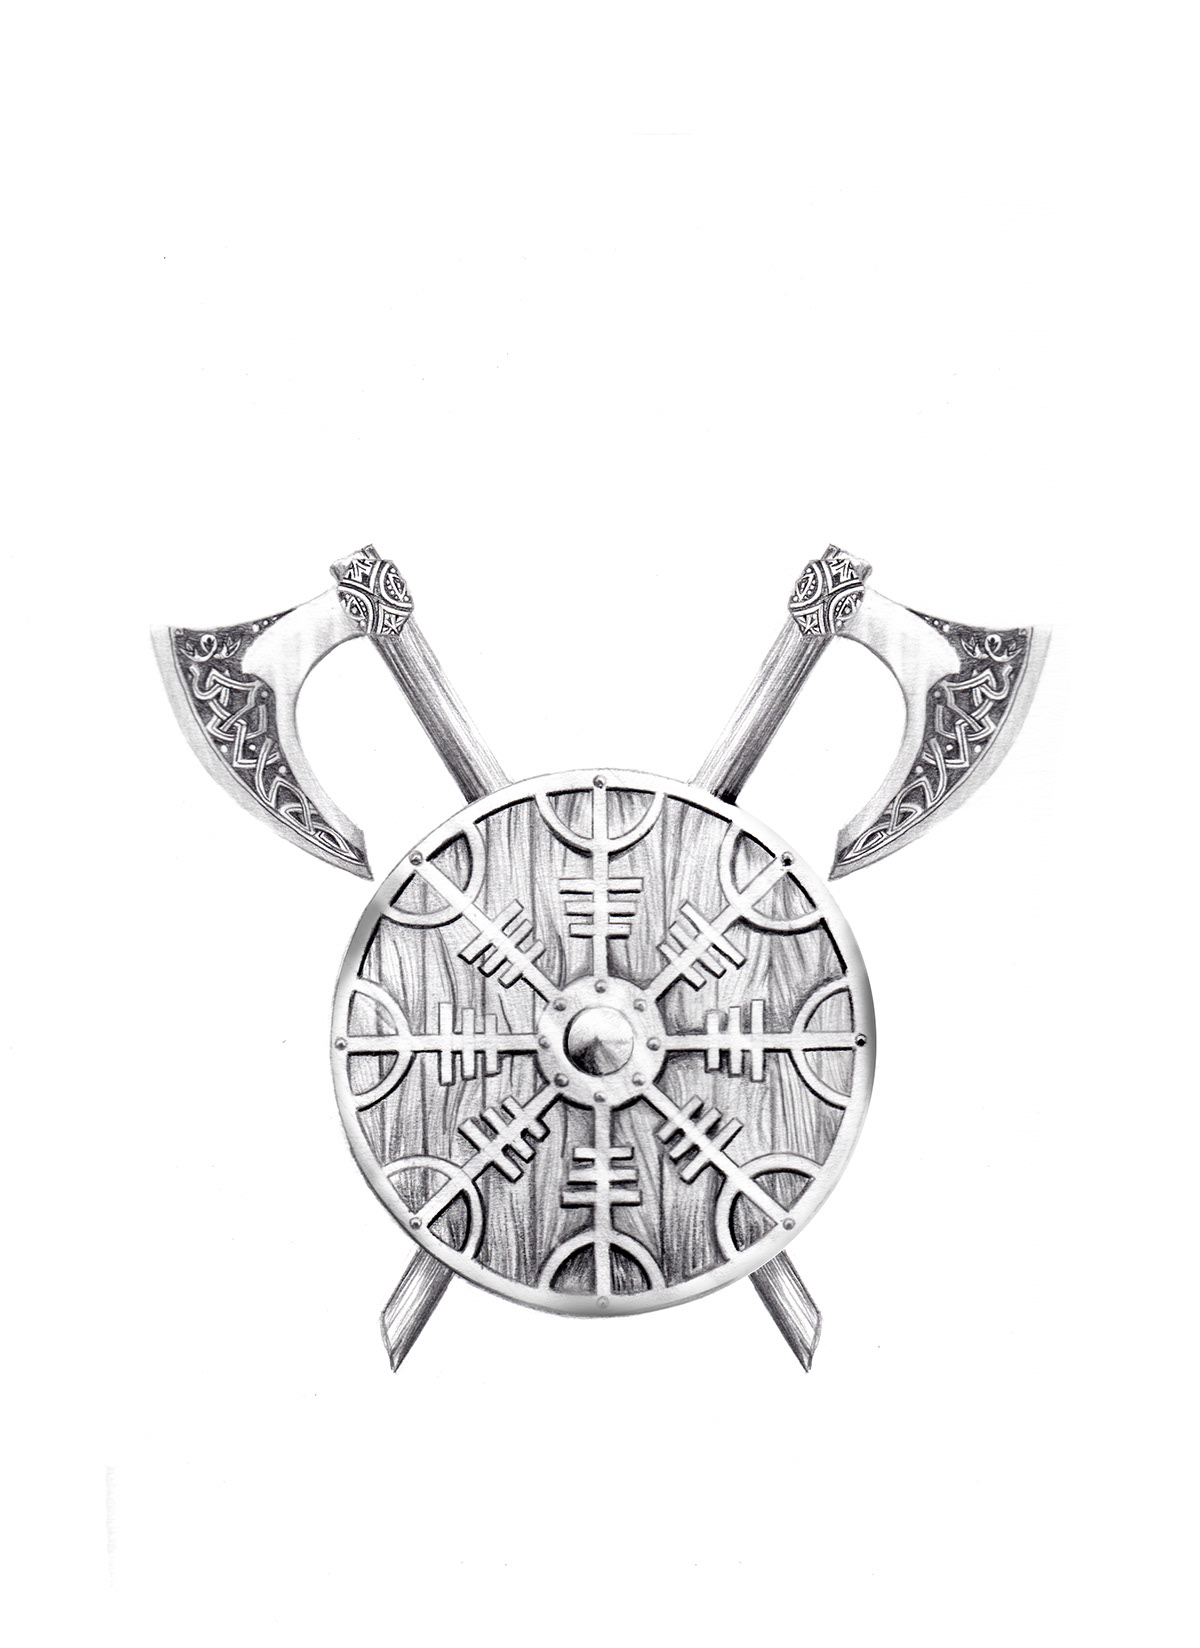 tattoo tatouage viking symbol symbole Ægishjálmr tiffanie kieny strasbourg bouciler shield hache